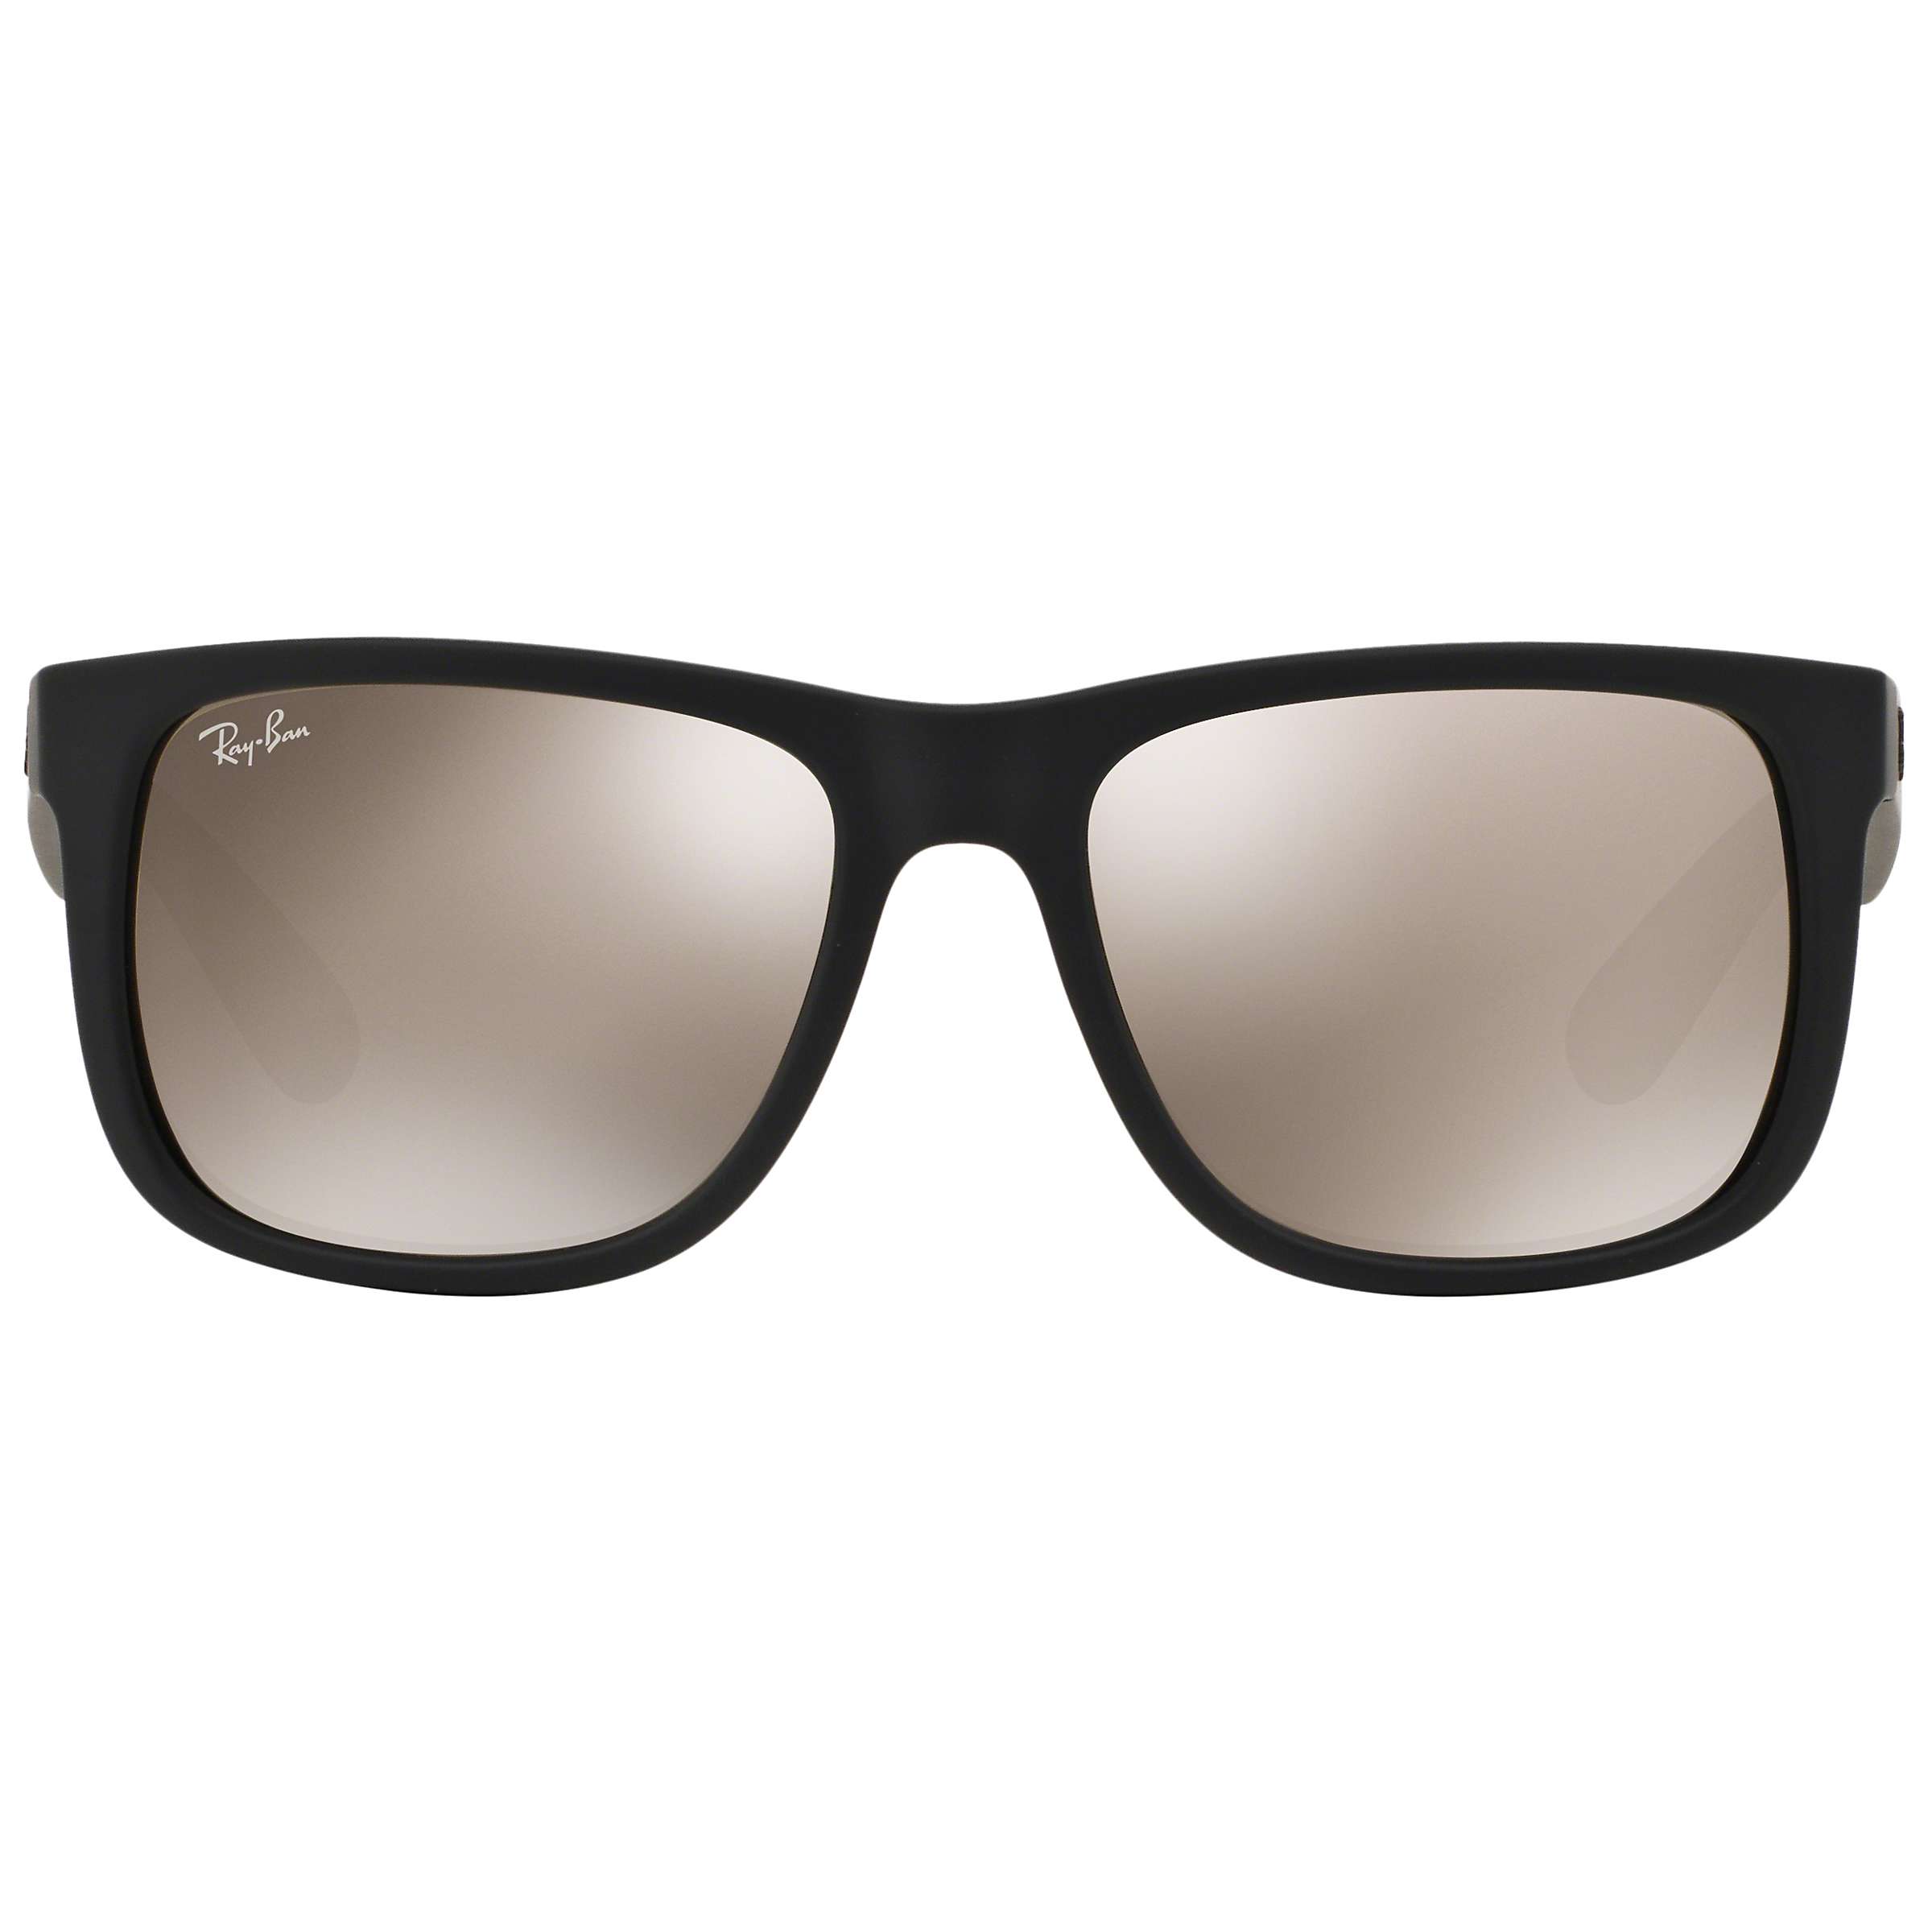 Buy Ray-Ban RB4165 Men's Justin Rectangular Sunglasses Online at johnlewis.com